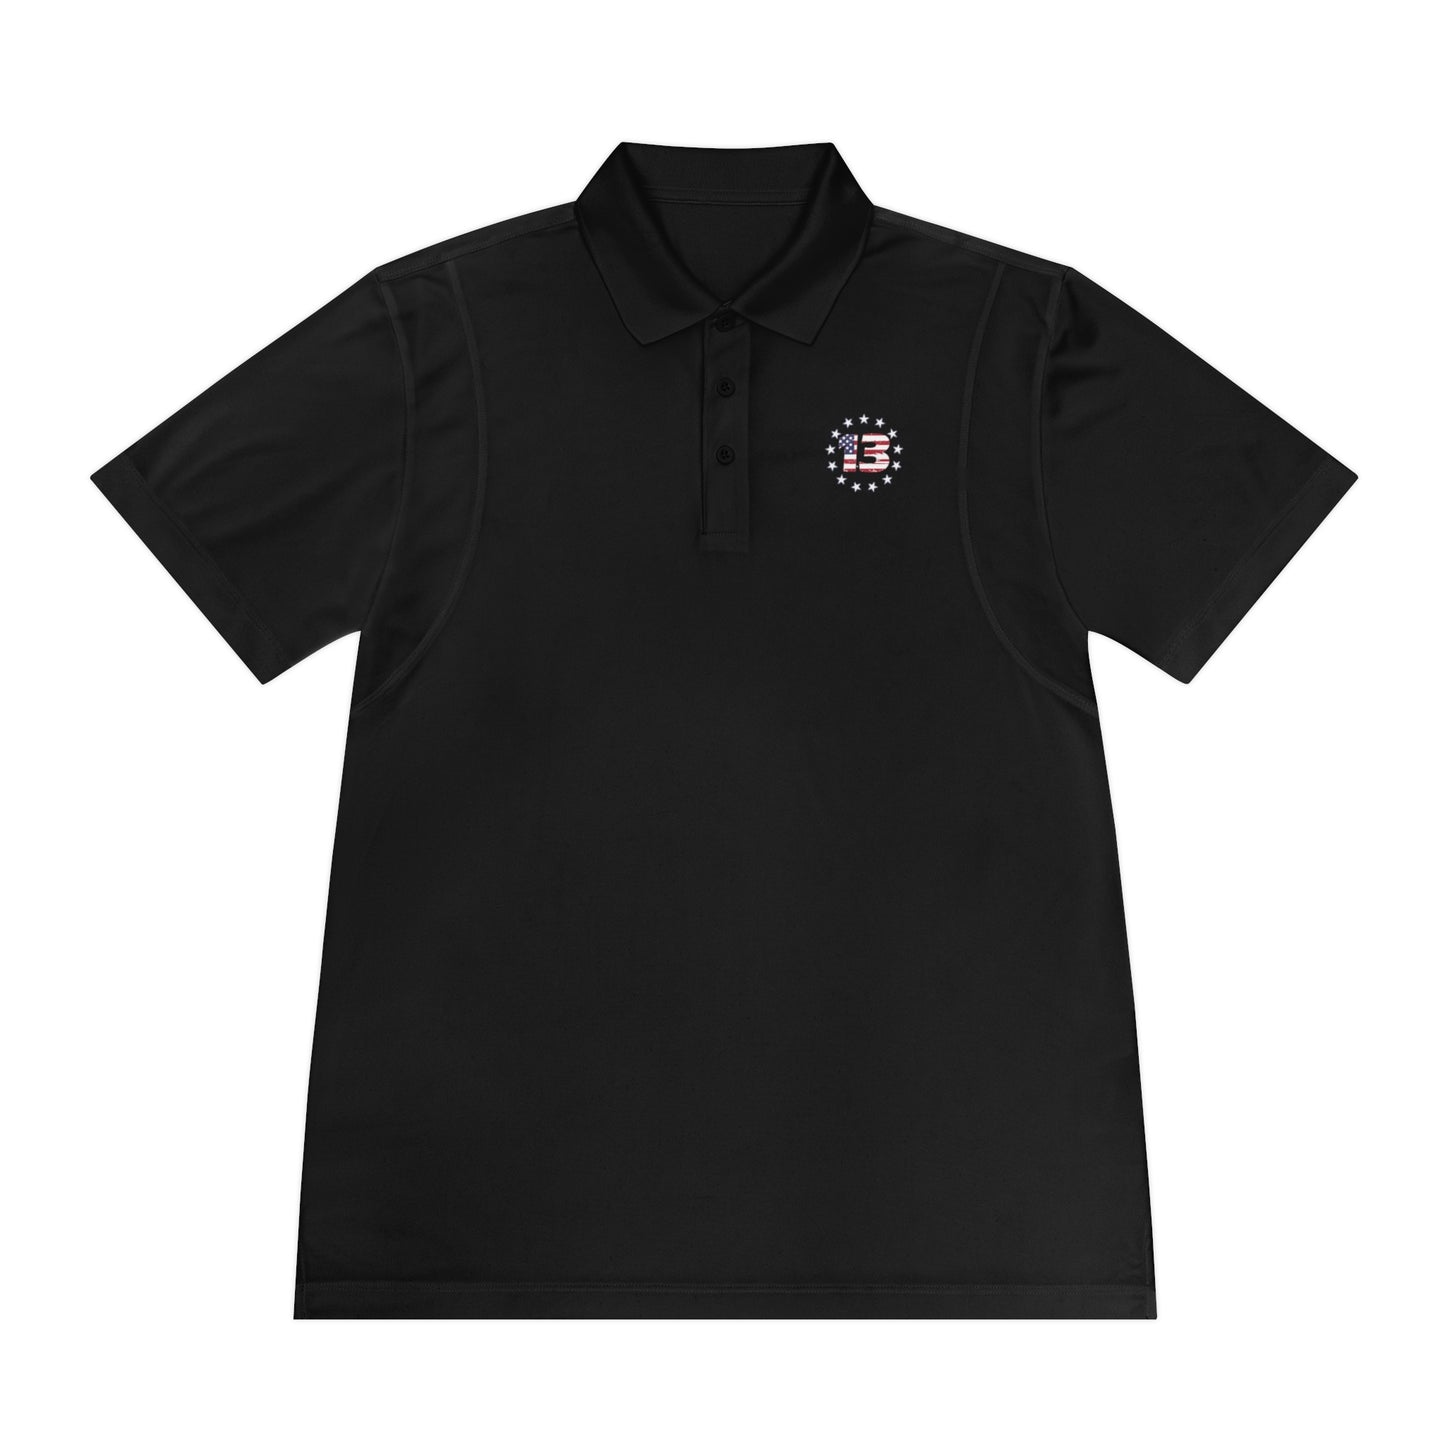 Men's Sport Polo Shirt 13 circle dark